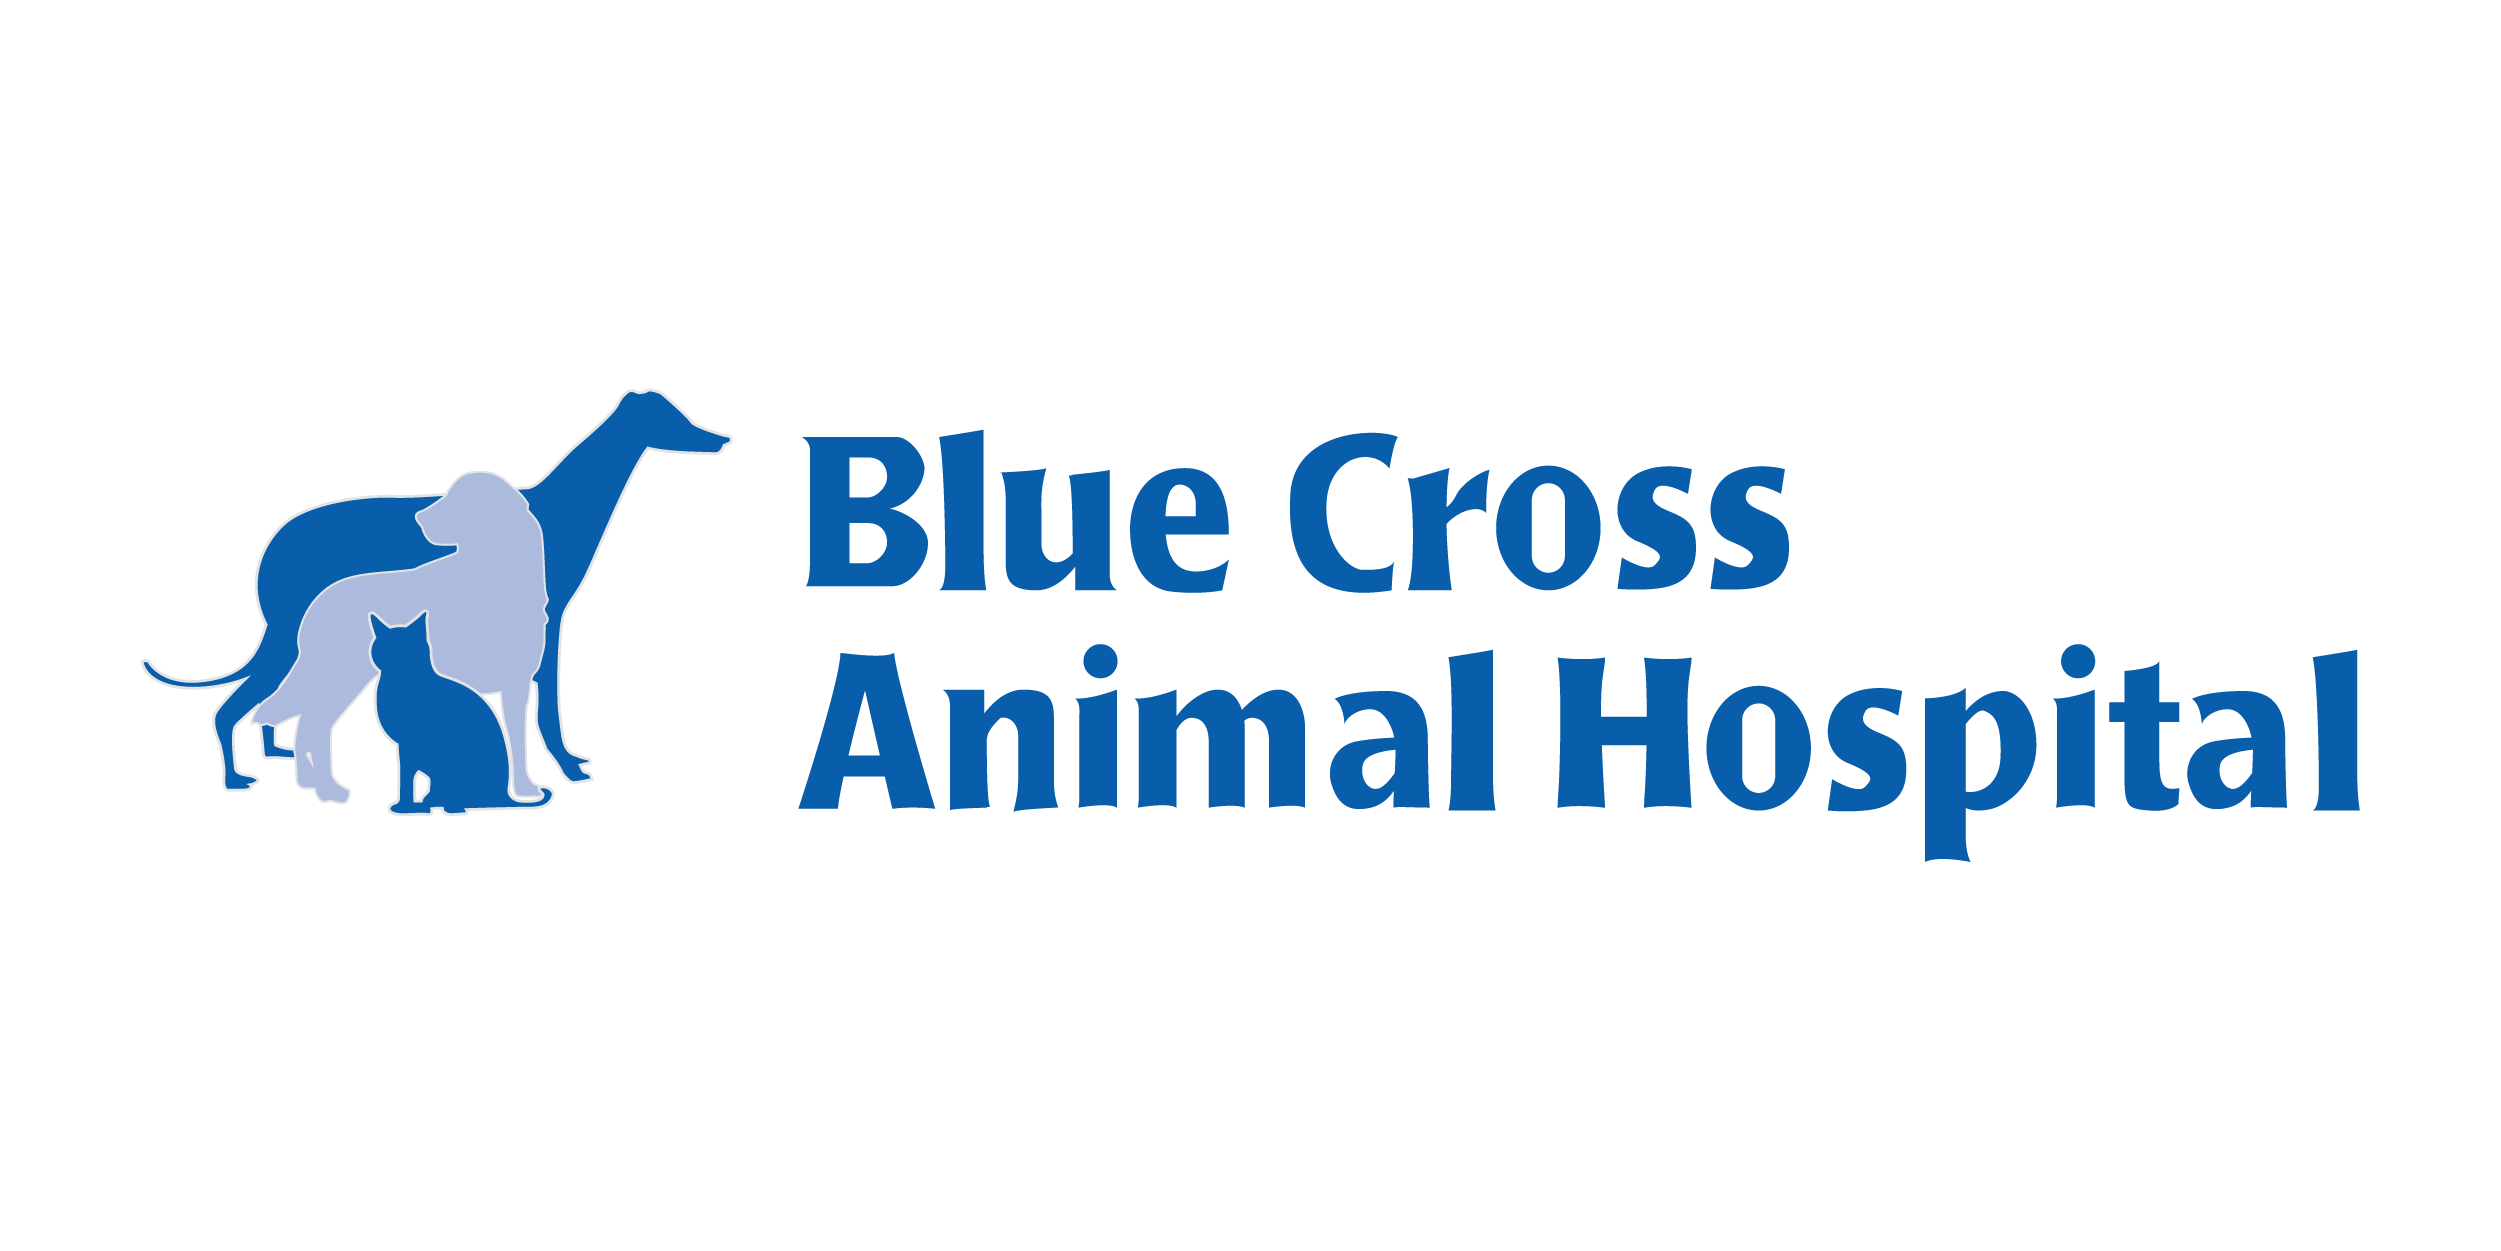 Blue Cross Animal Hospital in Minneapolis, Minnesota